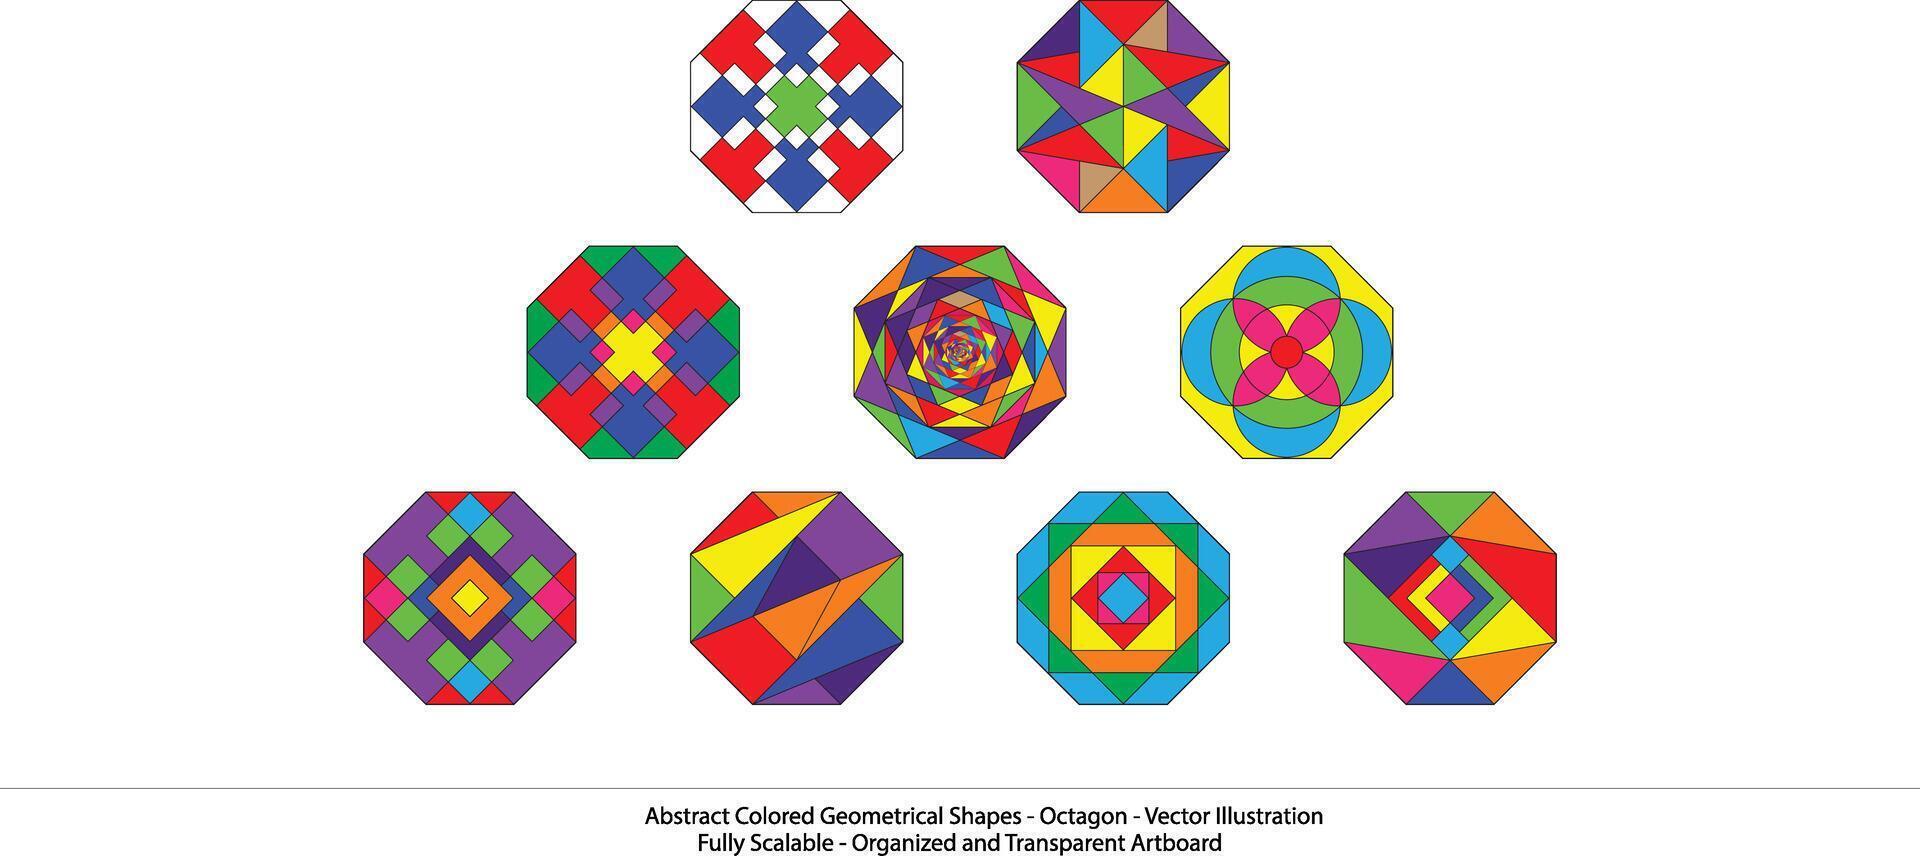 abstrato colori geométrico formas - octógono. iridescente octógono, uma caleidoscópio do geométrico harmonia. moderno minimalismo vetor